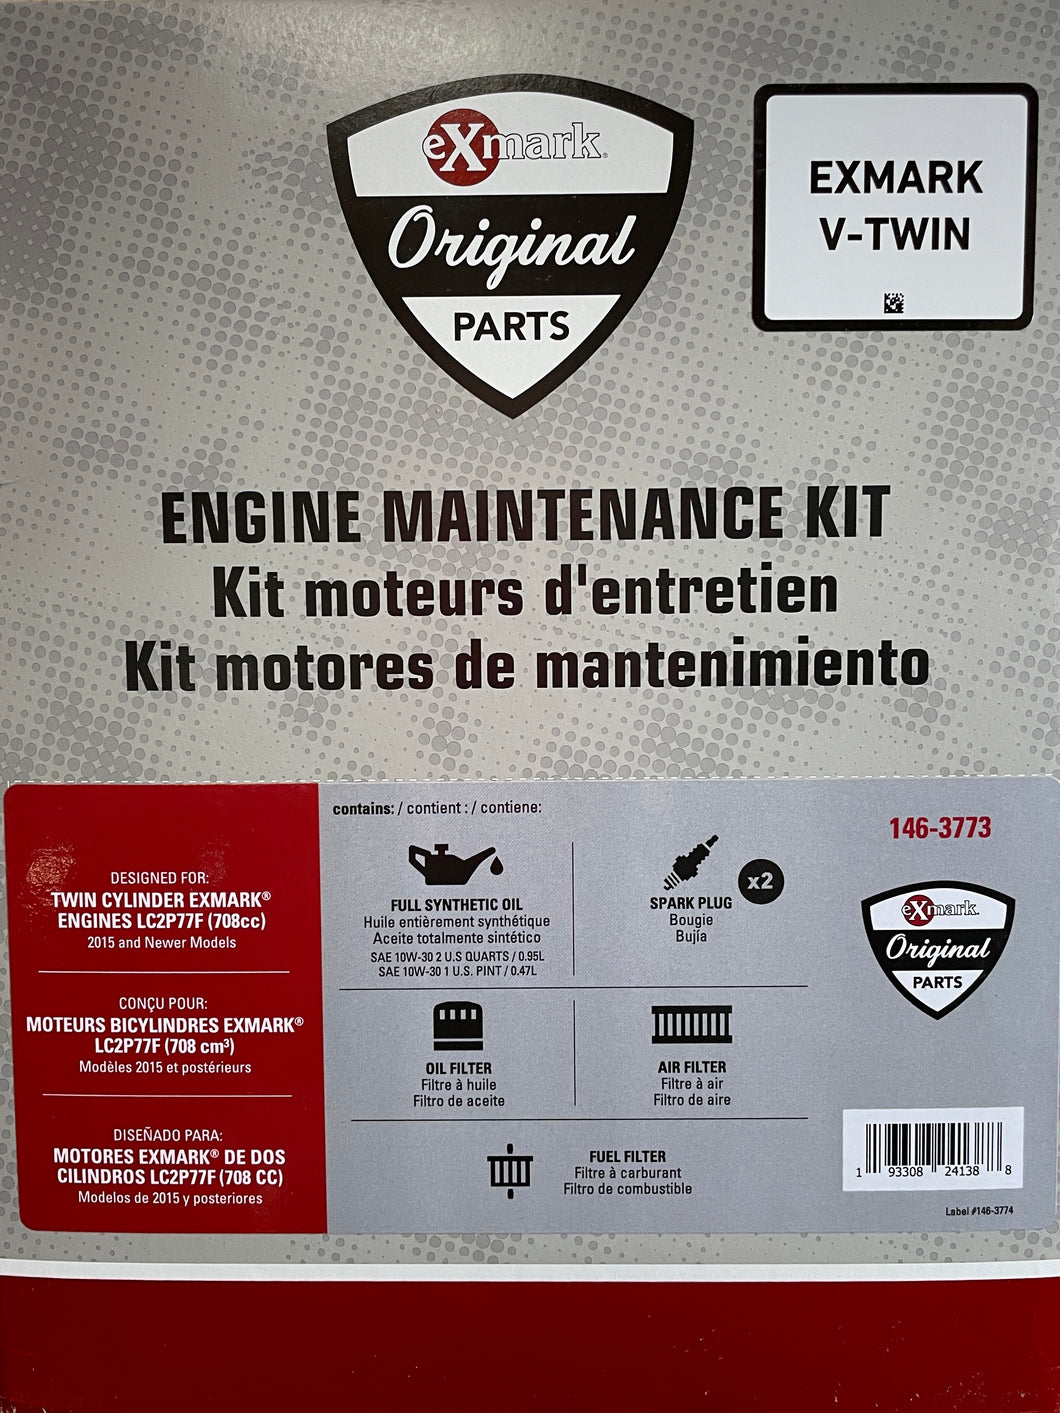 Exmark Engine Maintenance Kit - Exmark V-Twin (146-3773) was (126-9287)